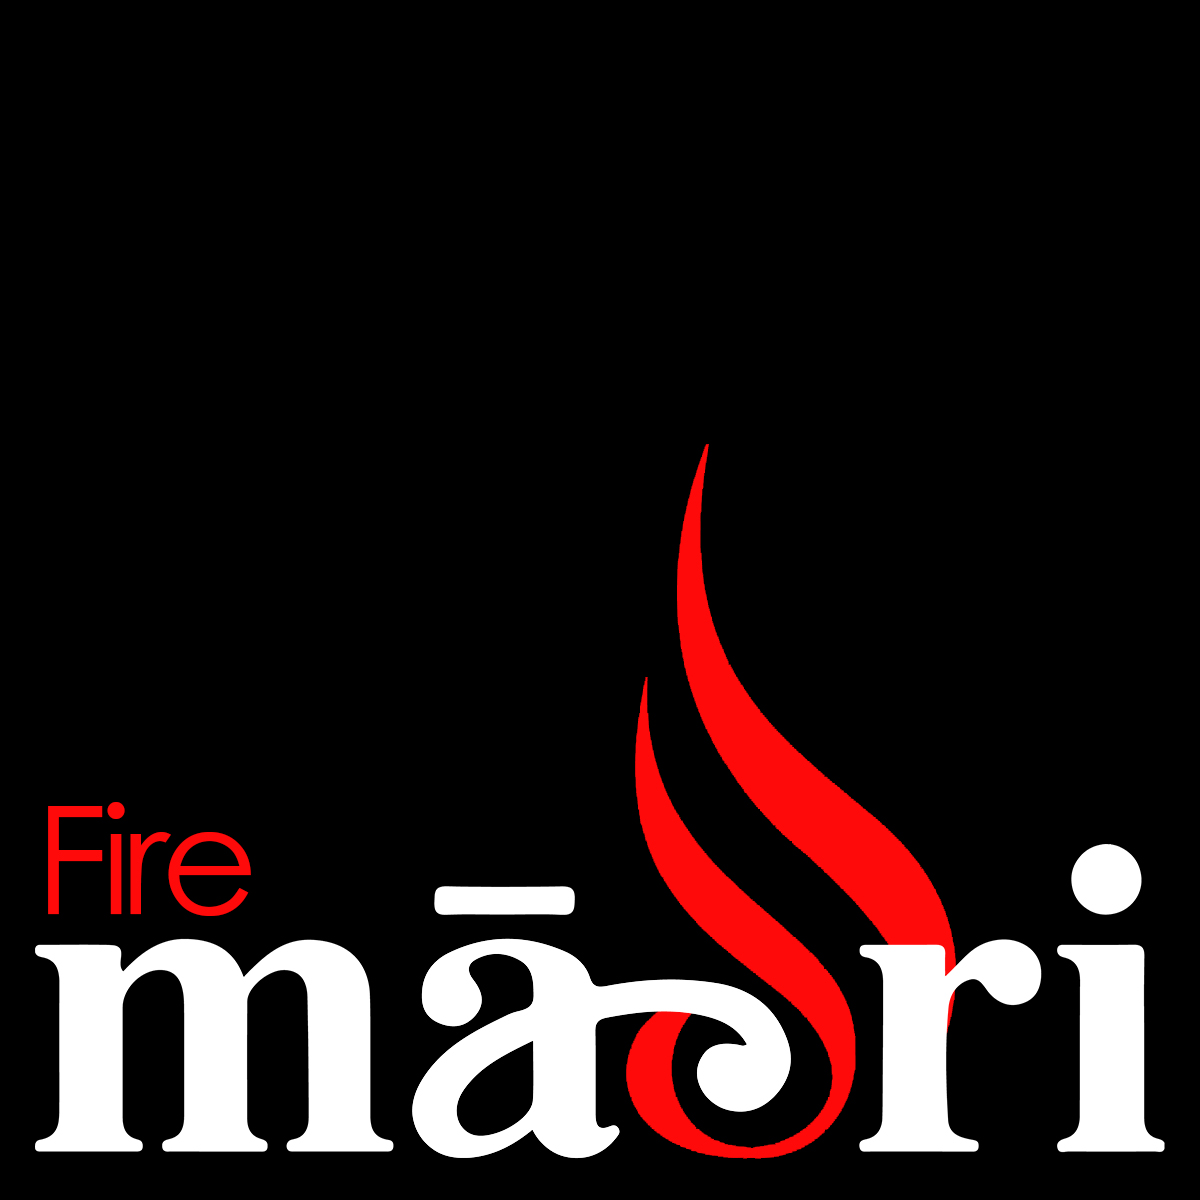 Maori fire show - Sputafuoco mangiafuoco